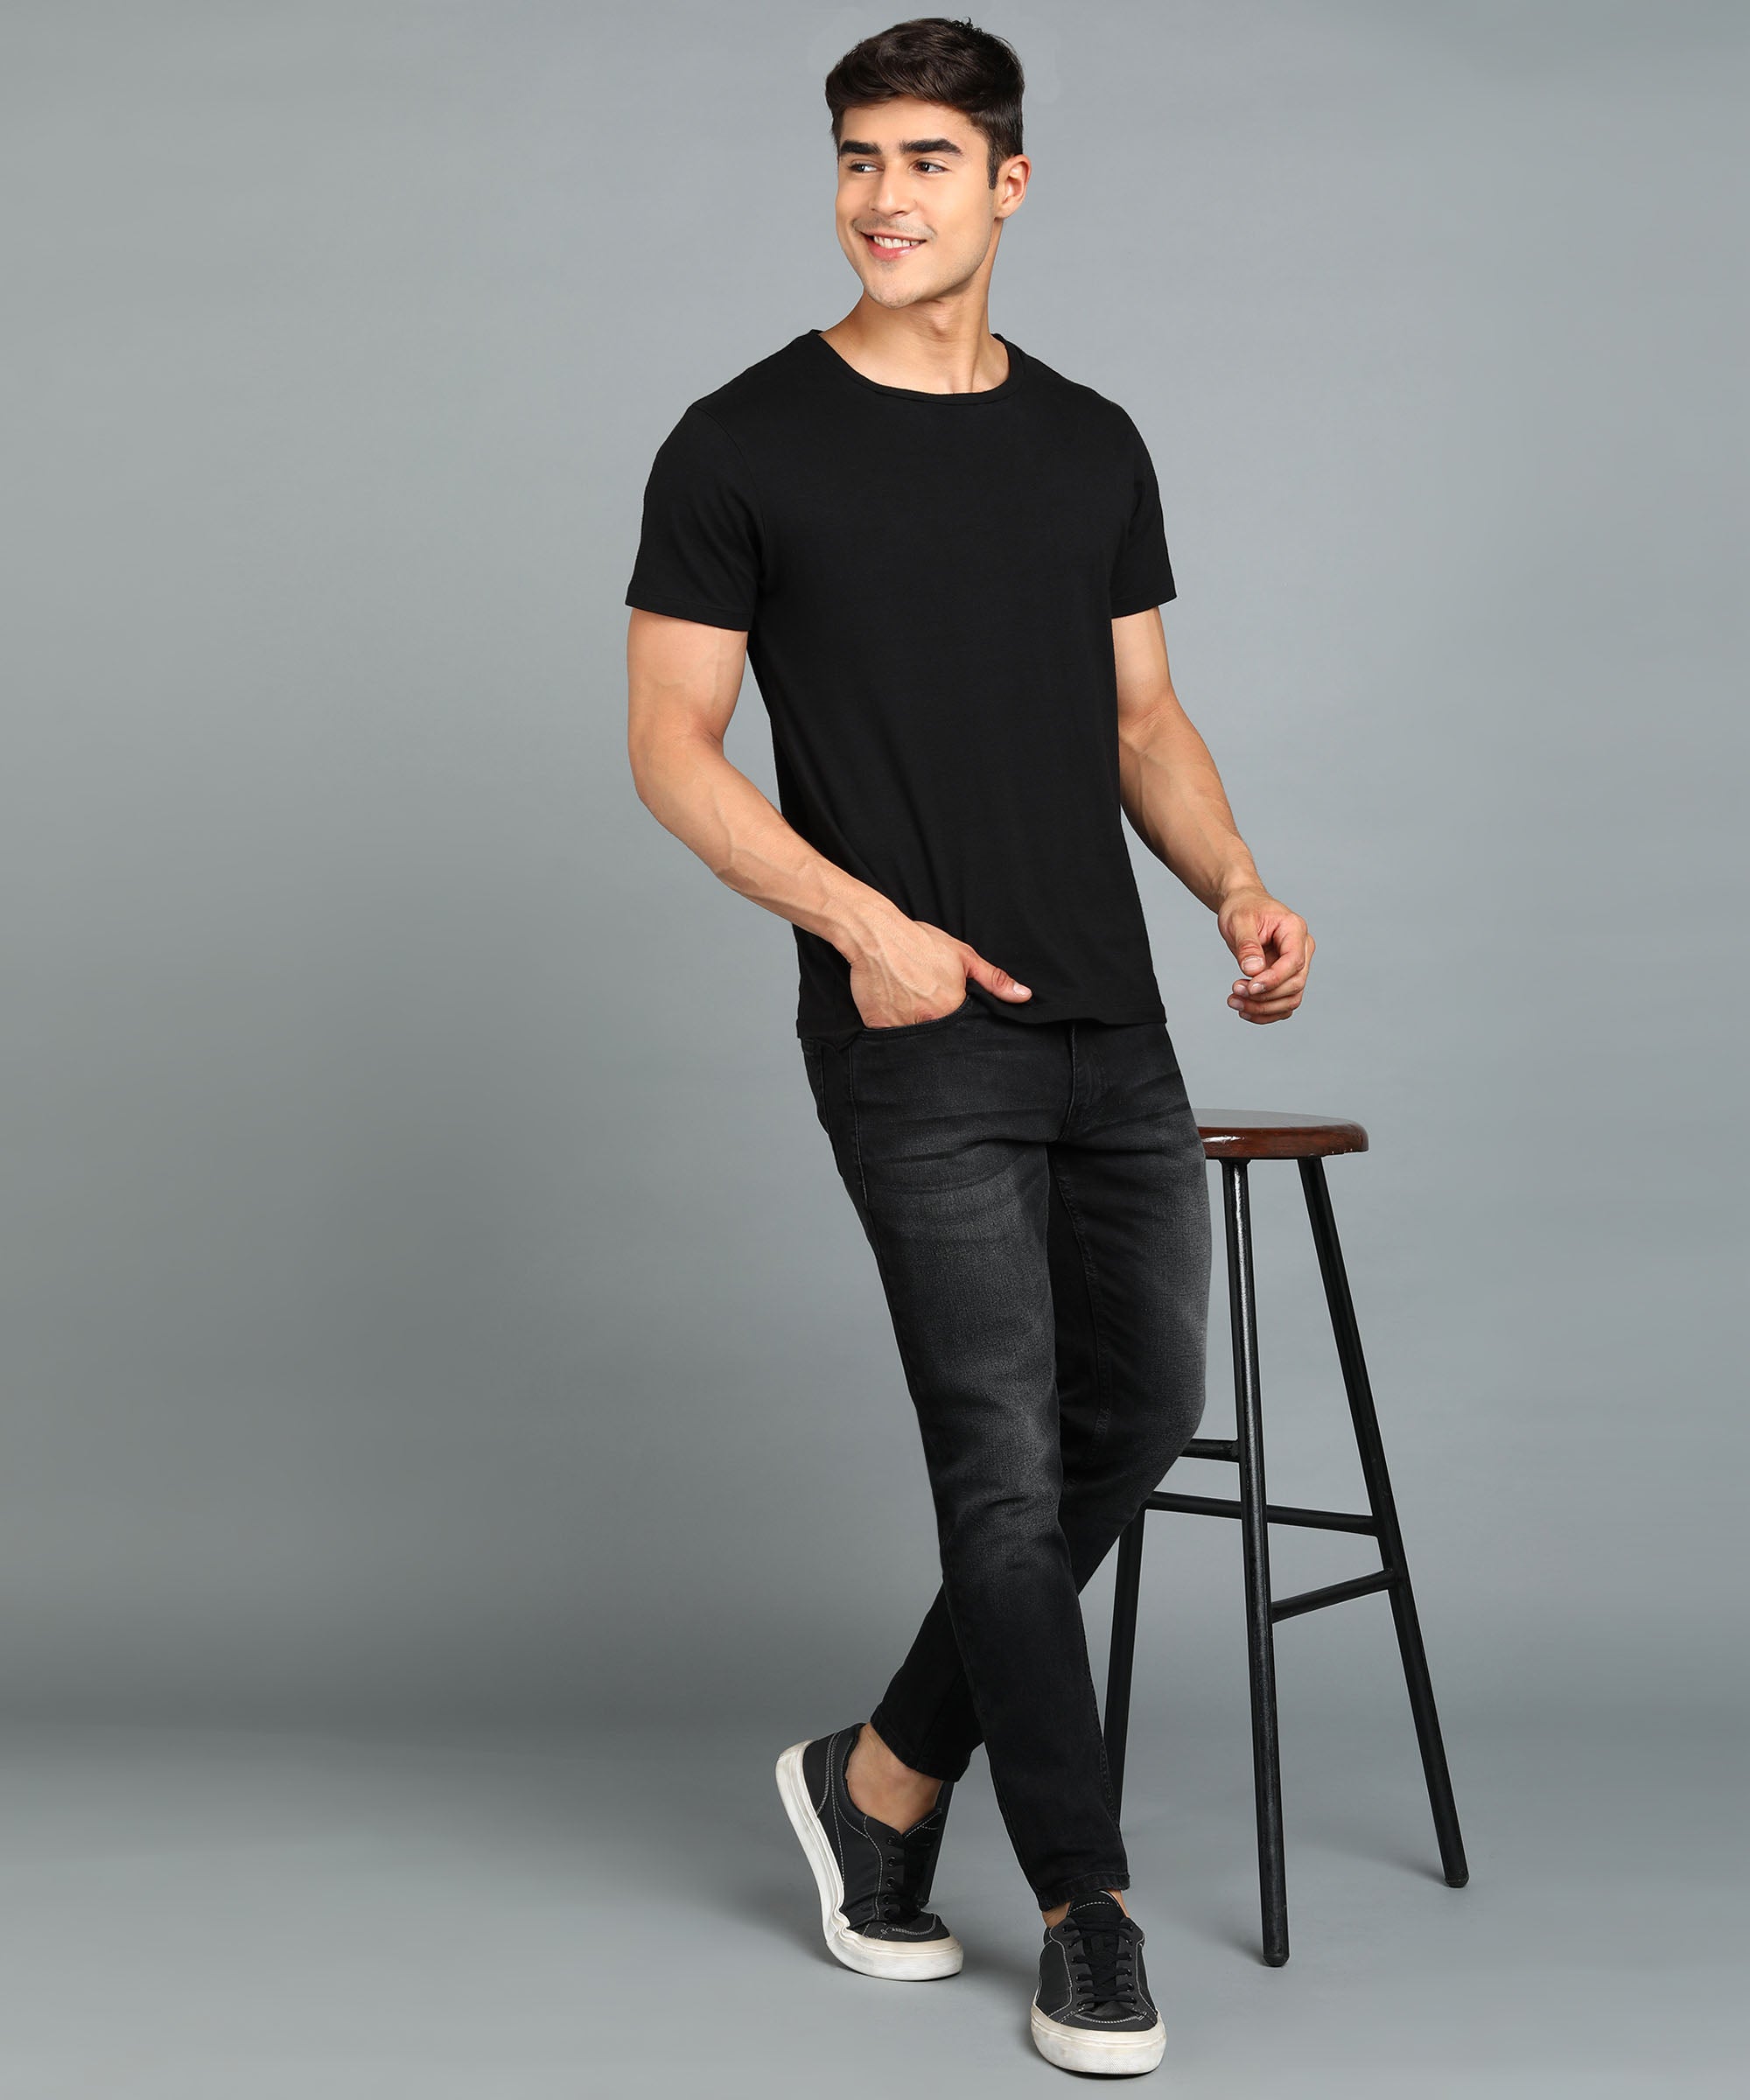 Urbano Fashion Men's Black Slim Fit Washed Jeans Stretchable